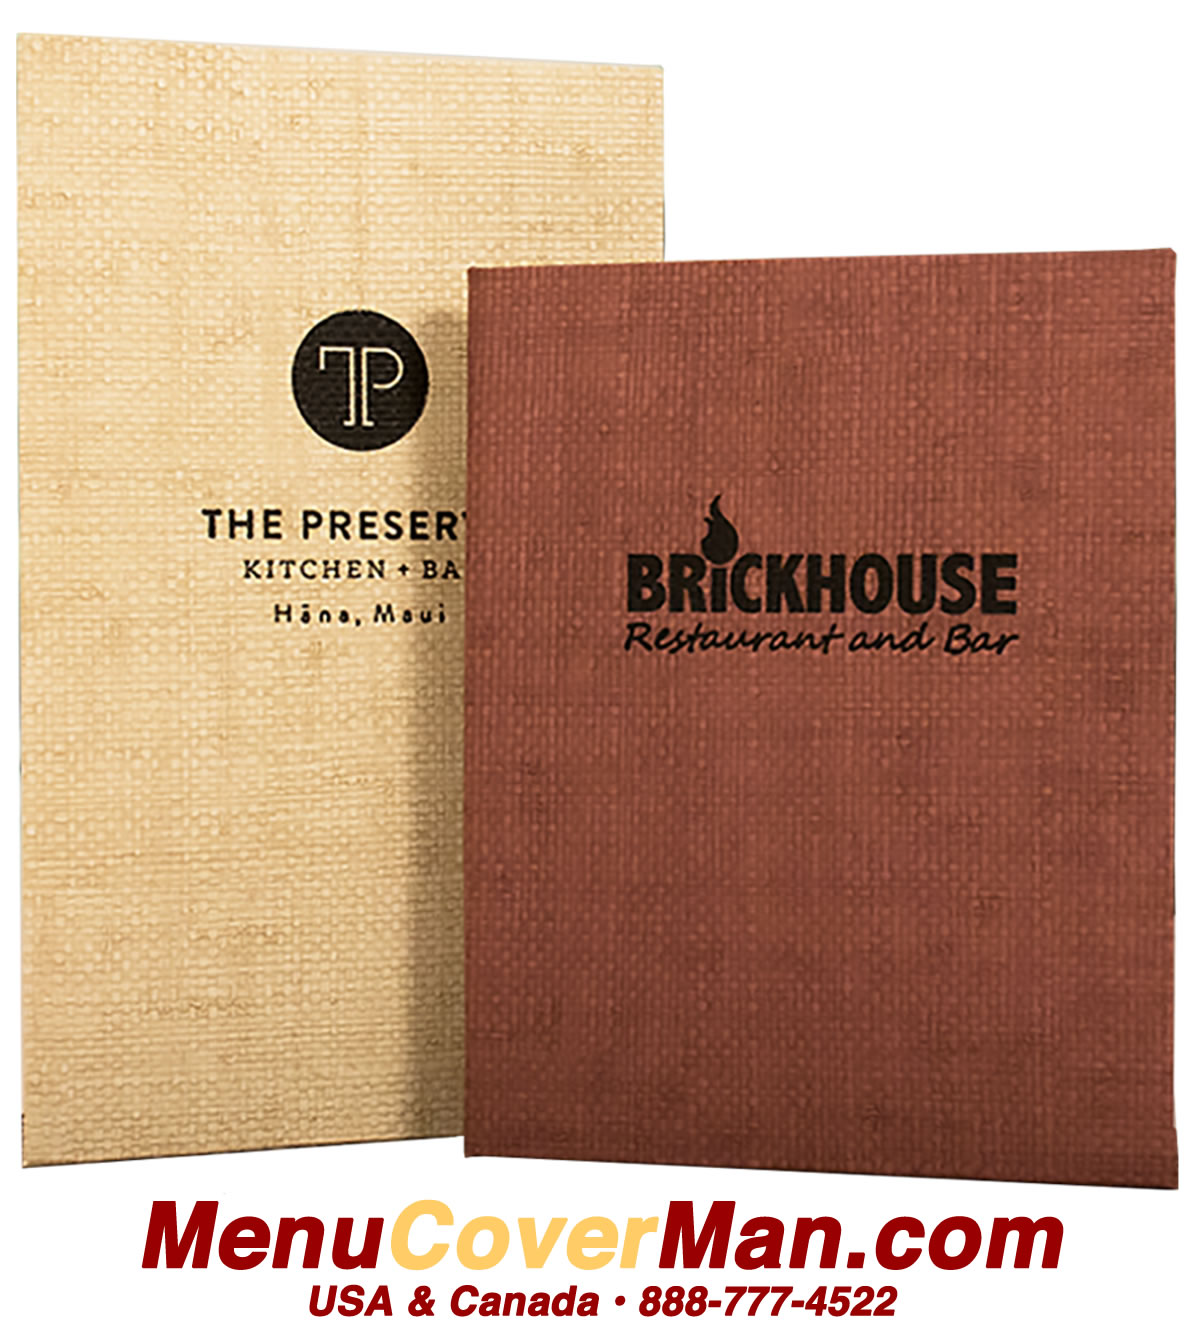 The Brickhouse Restaurant